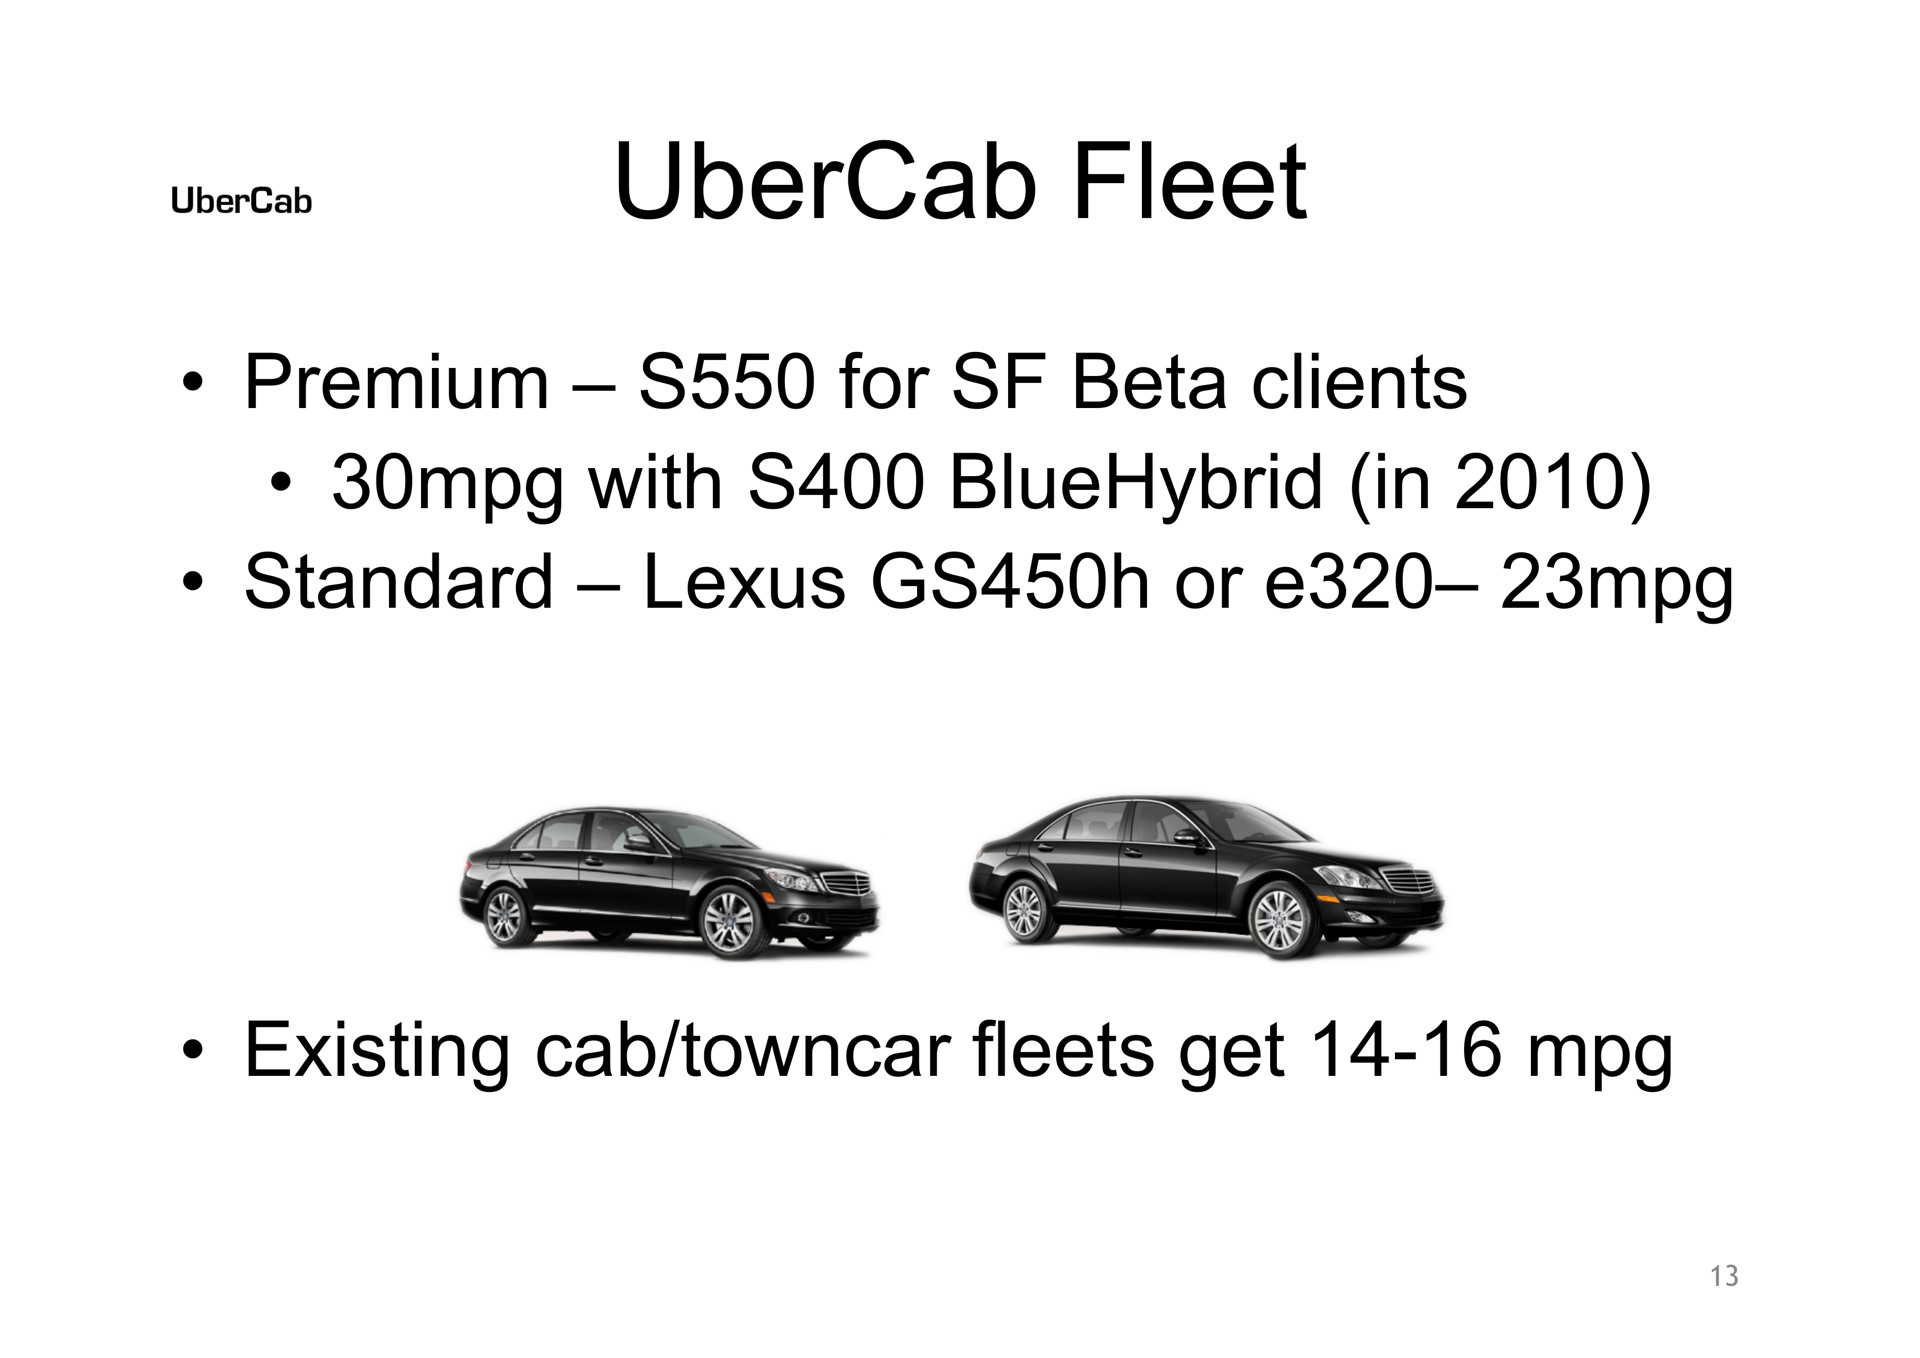 fleet | Uber